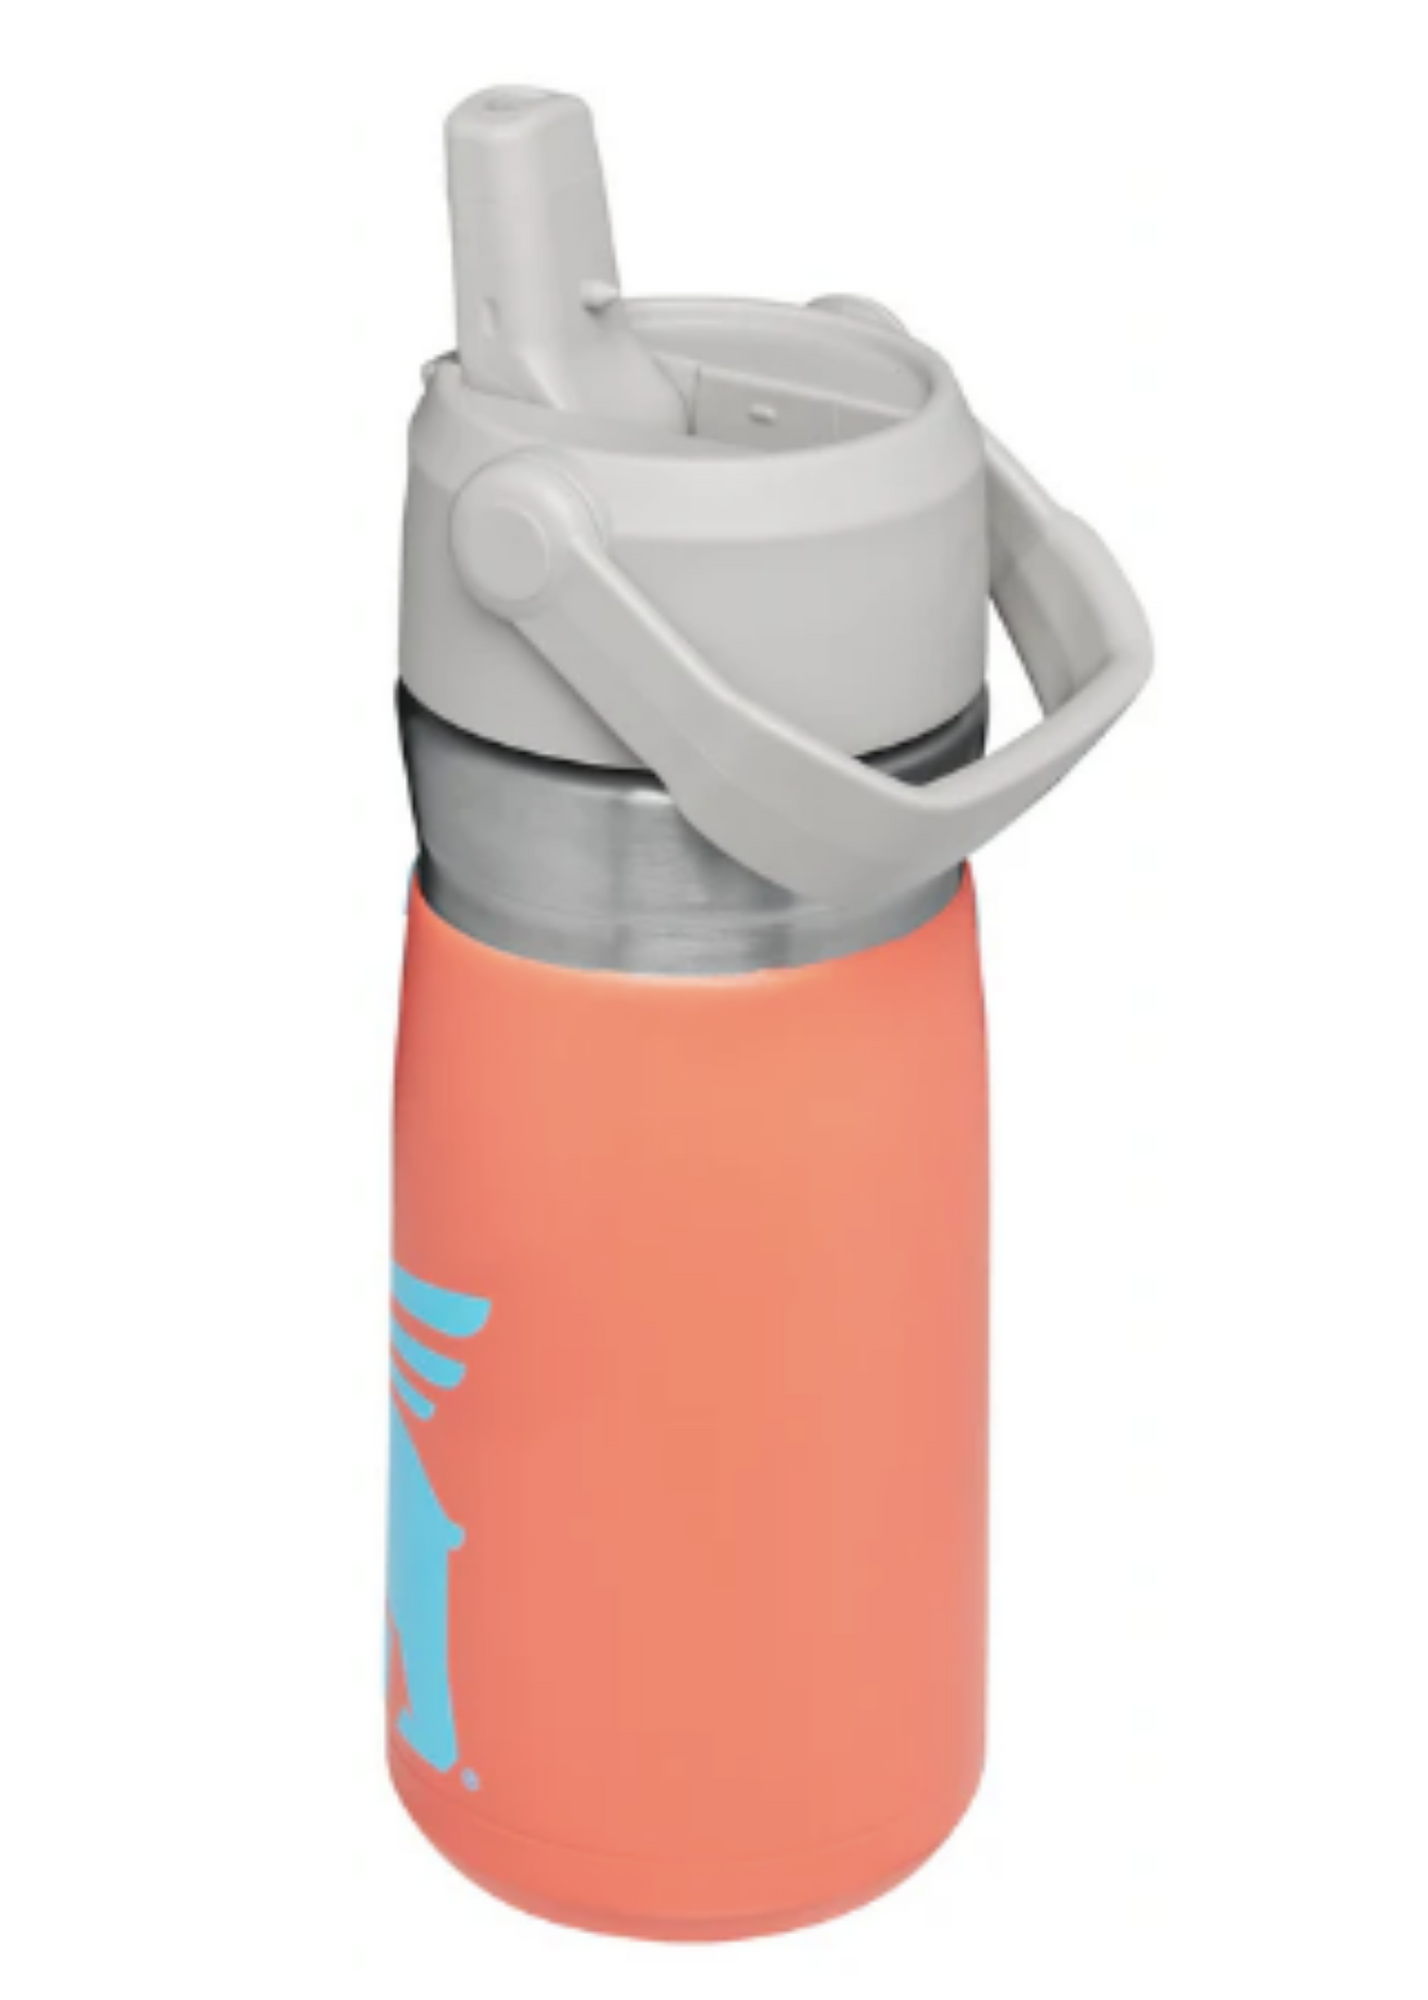 The IceFlow Flip Straw Water Bottle